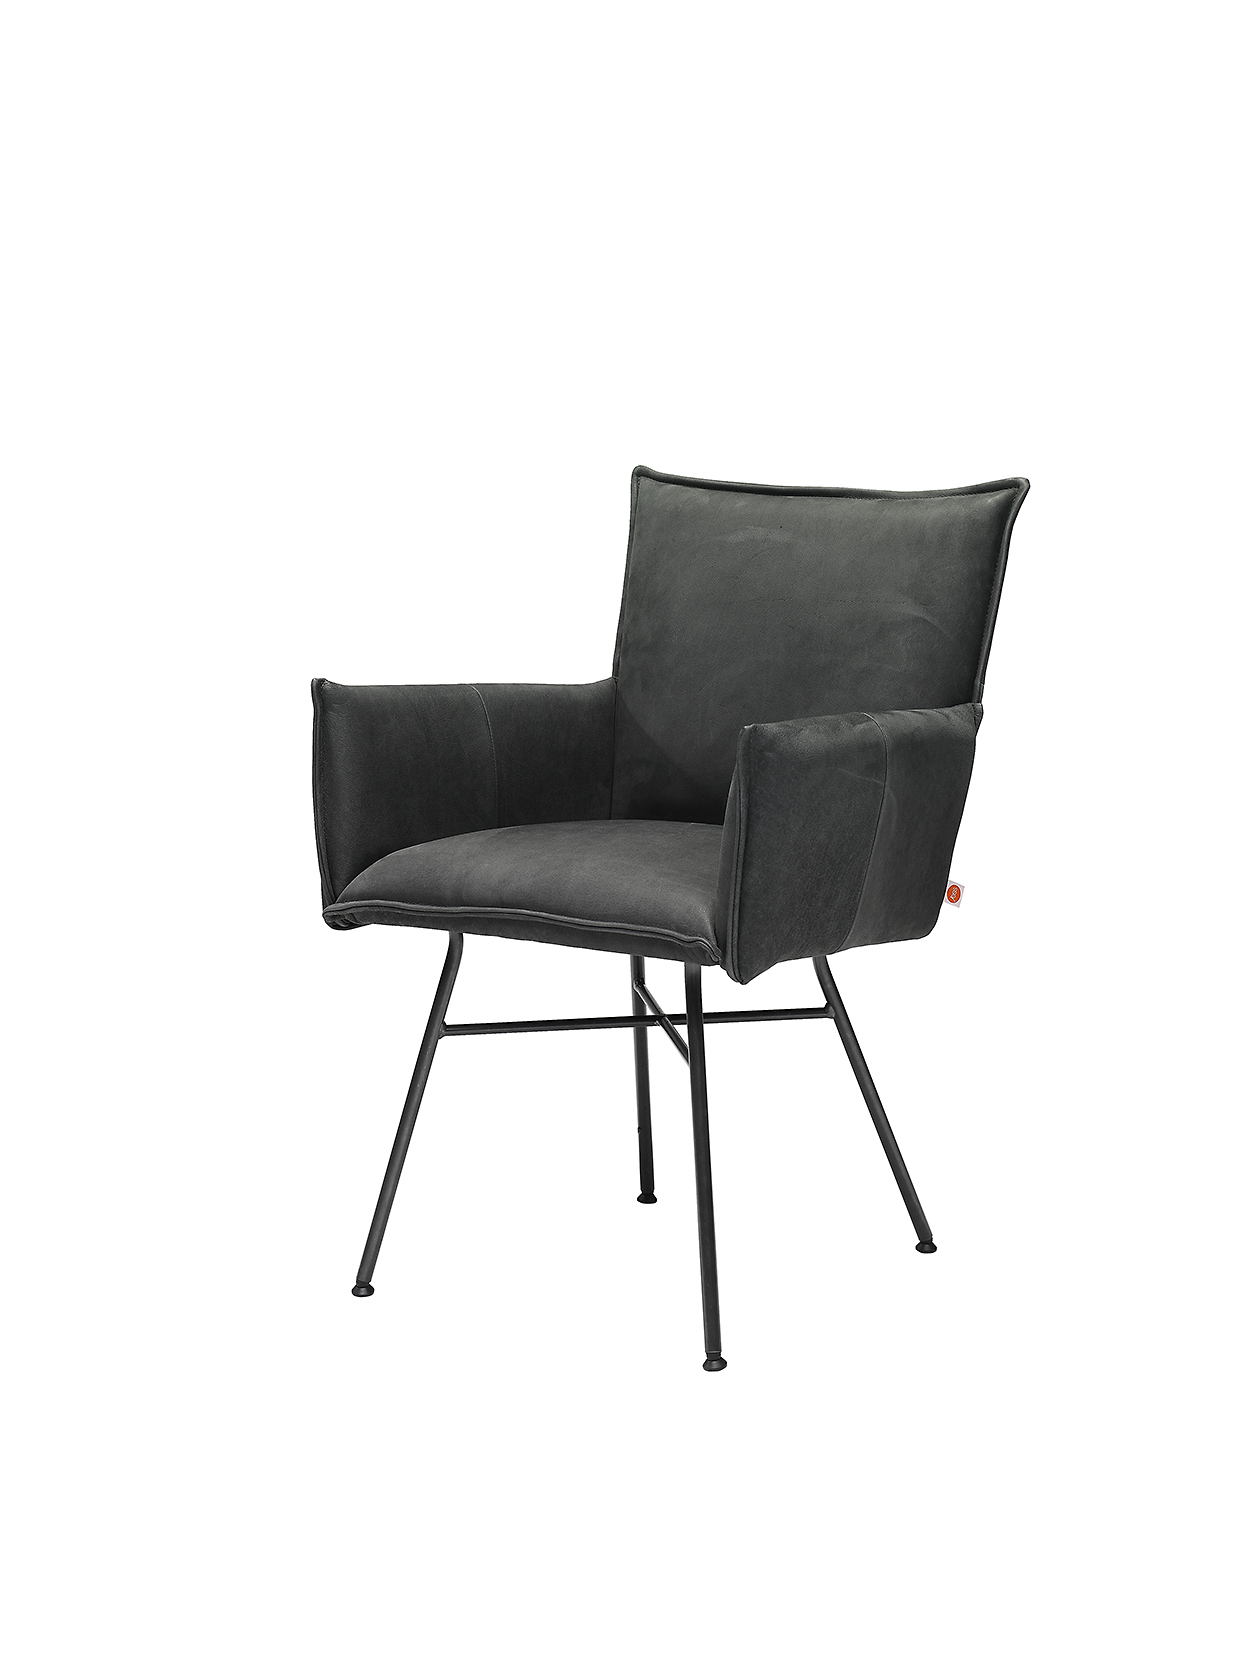 Sanne Chair With Arm Aurula Black Pers LR ZS 8720153744546